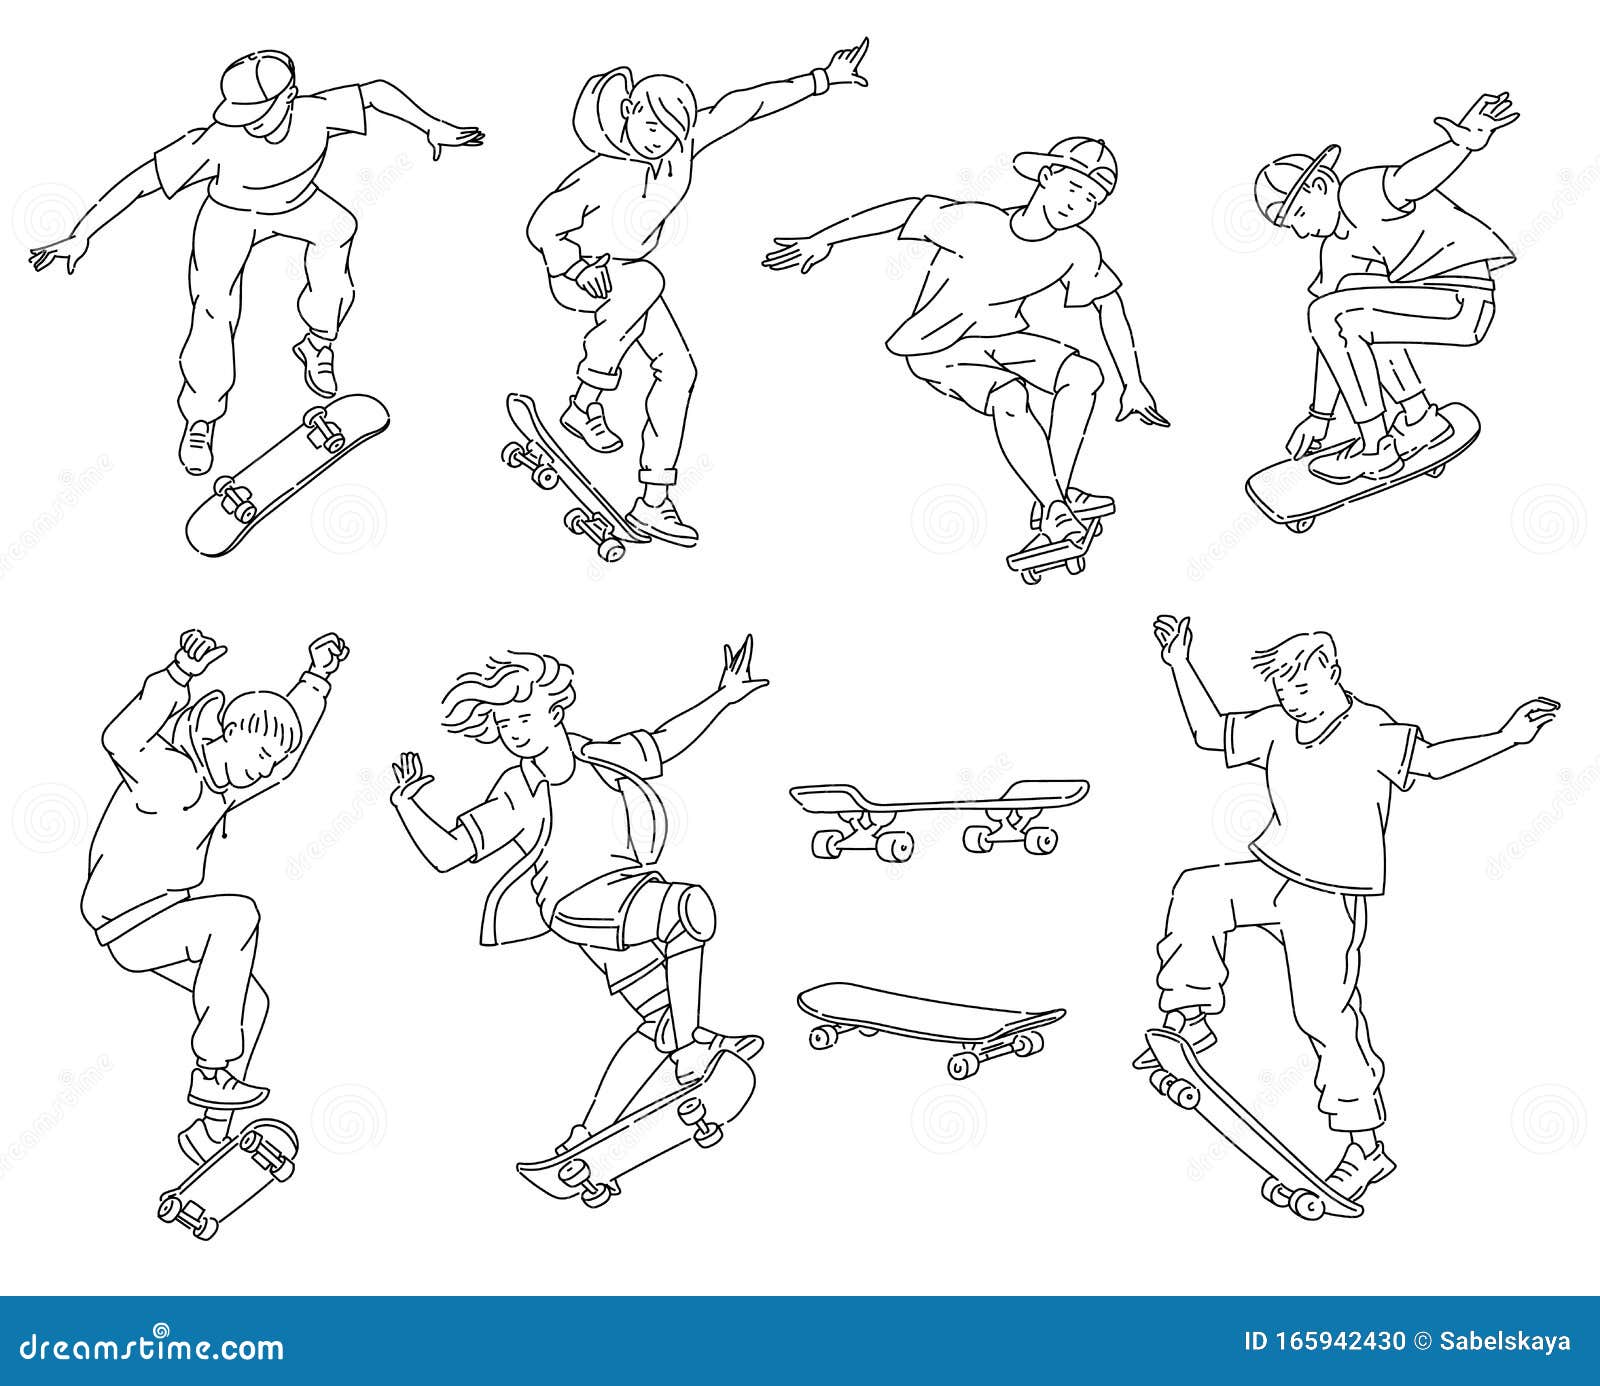 Teenage Boys Doing Skateboard Tricks - Black and White Line Art